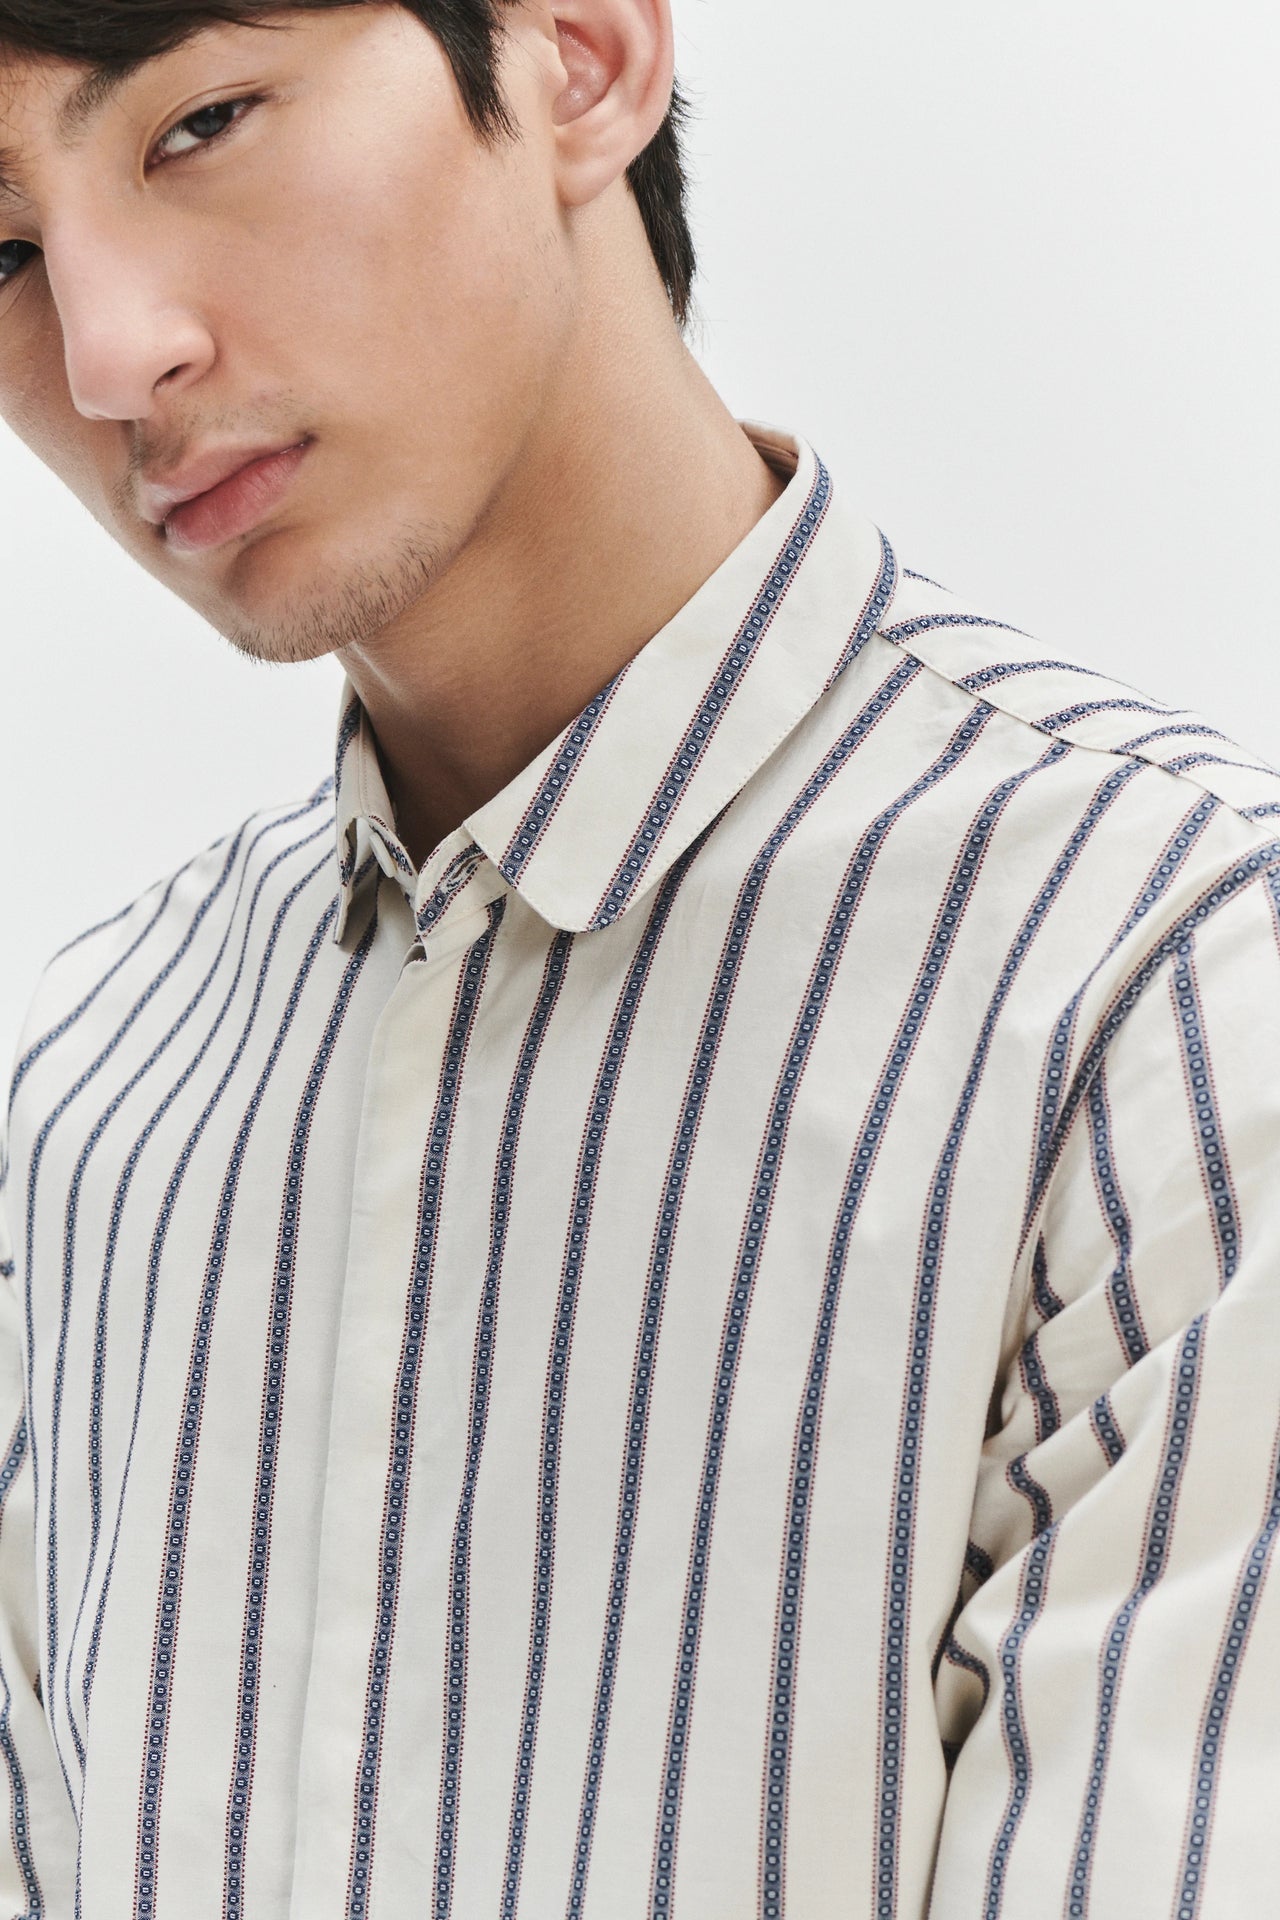 Cute Round Collar Shirt in a Striped Italian Organic Cotton